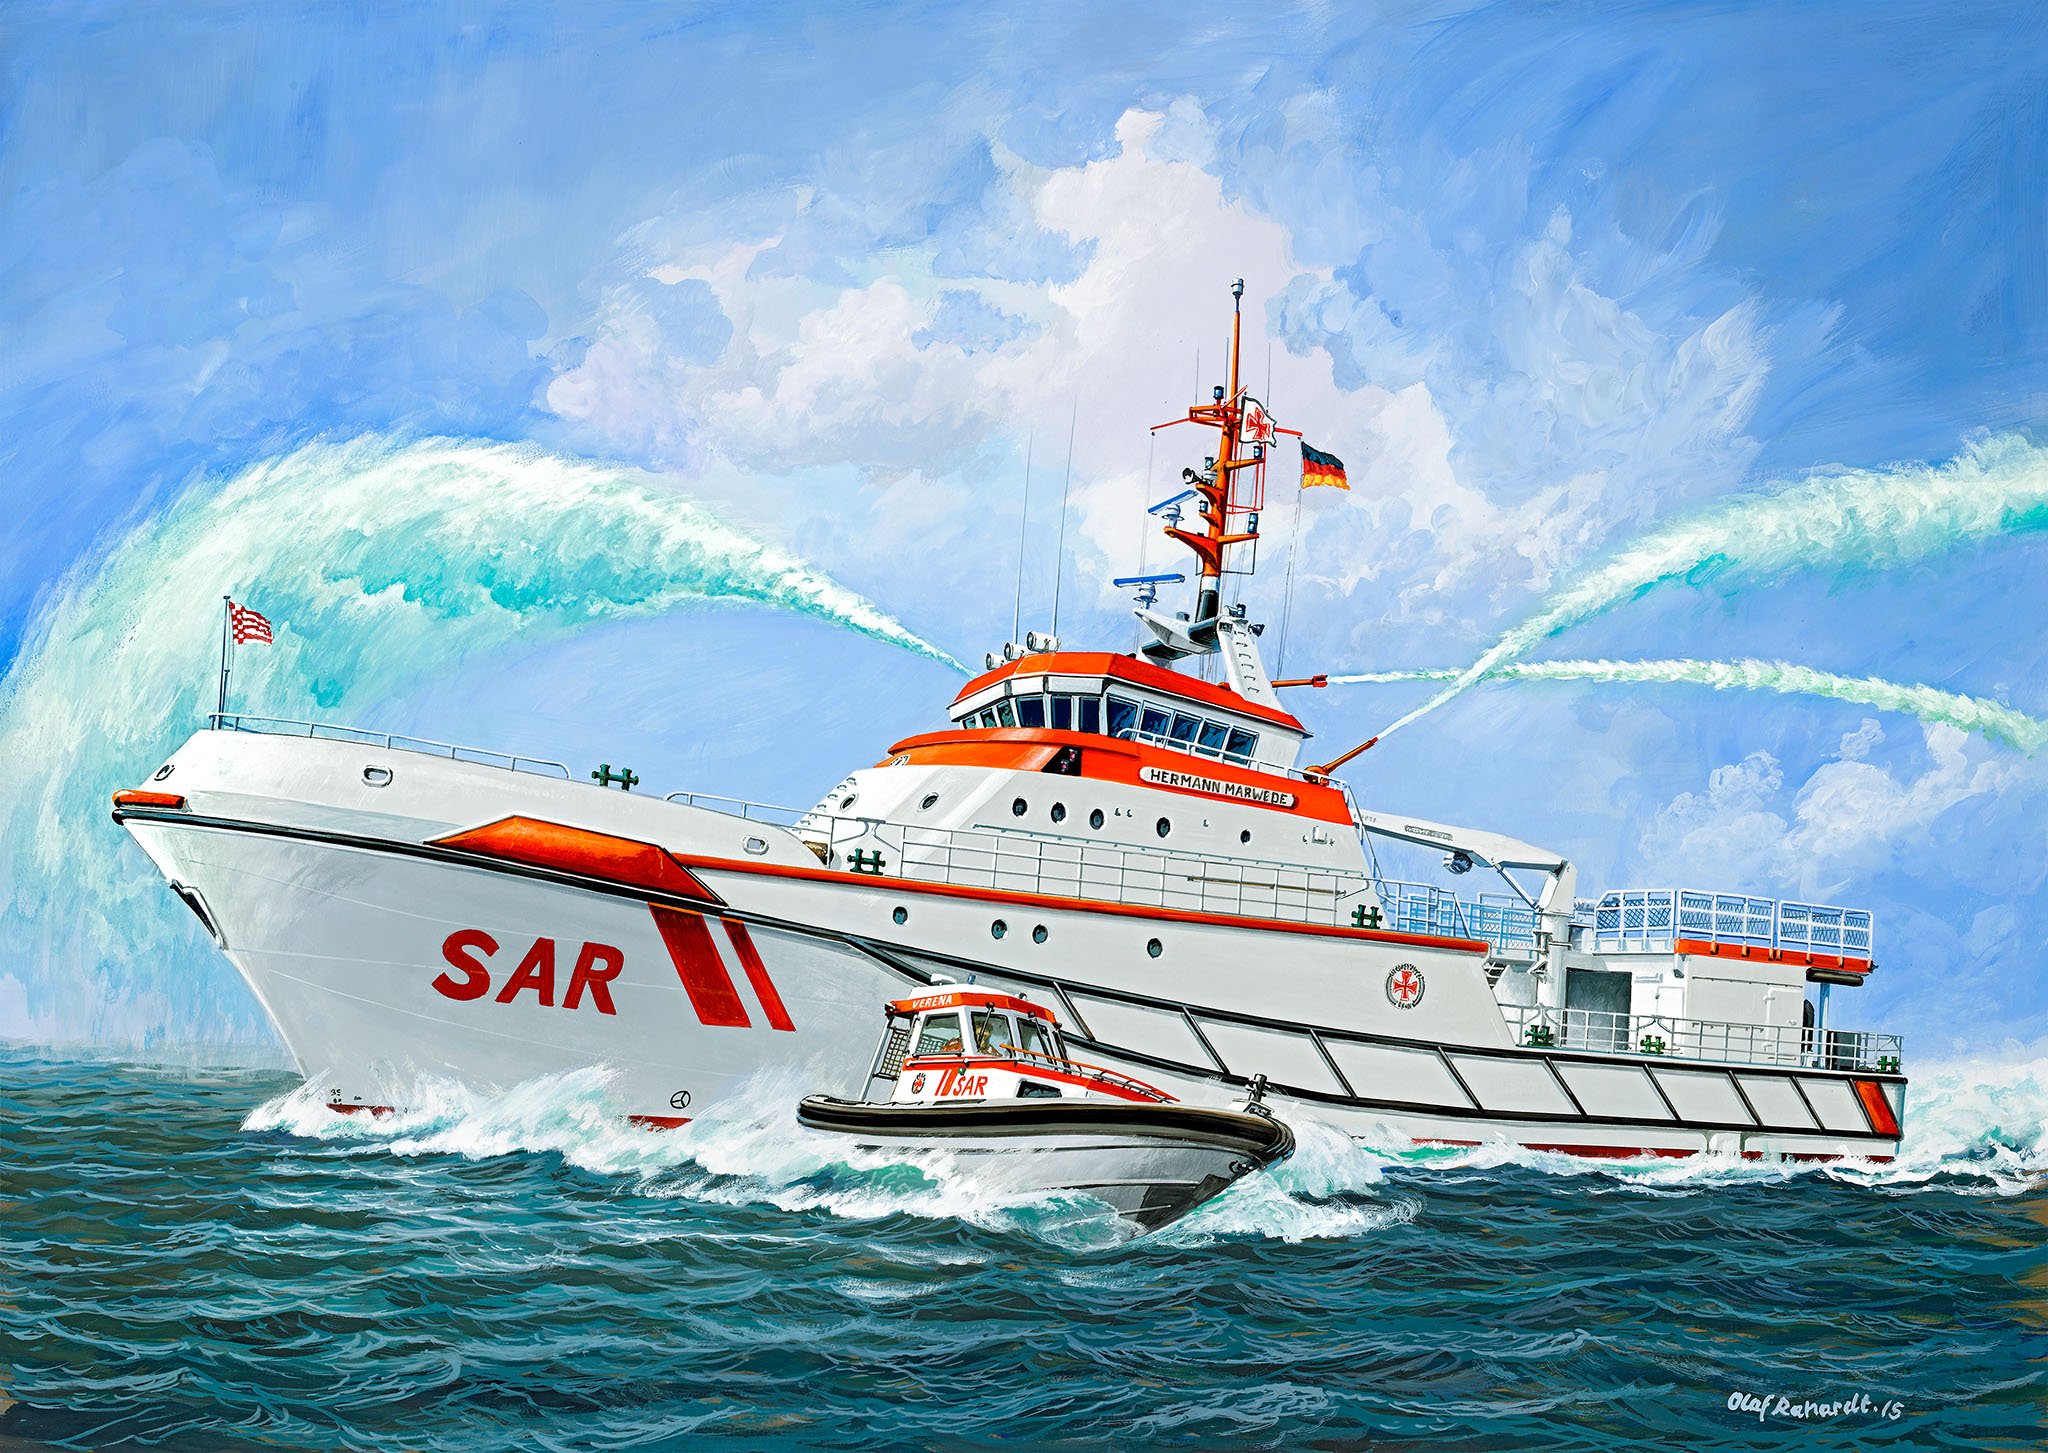 Ship Sea Sky Digital Art Watermarked 2048x1453